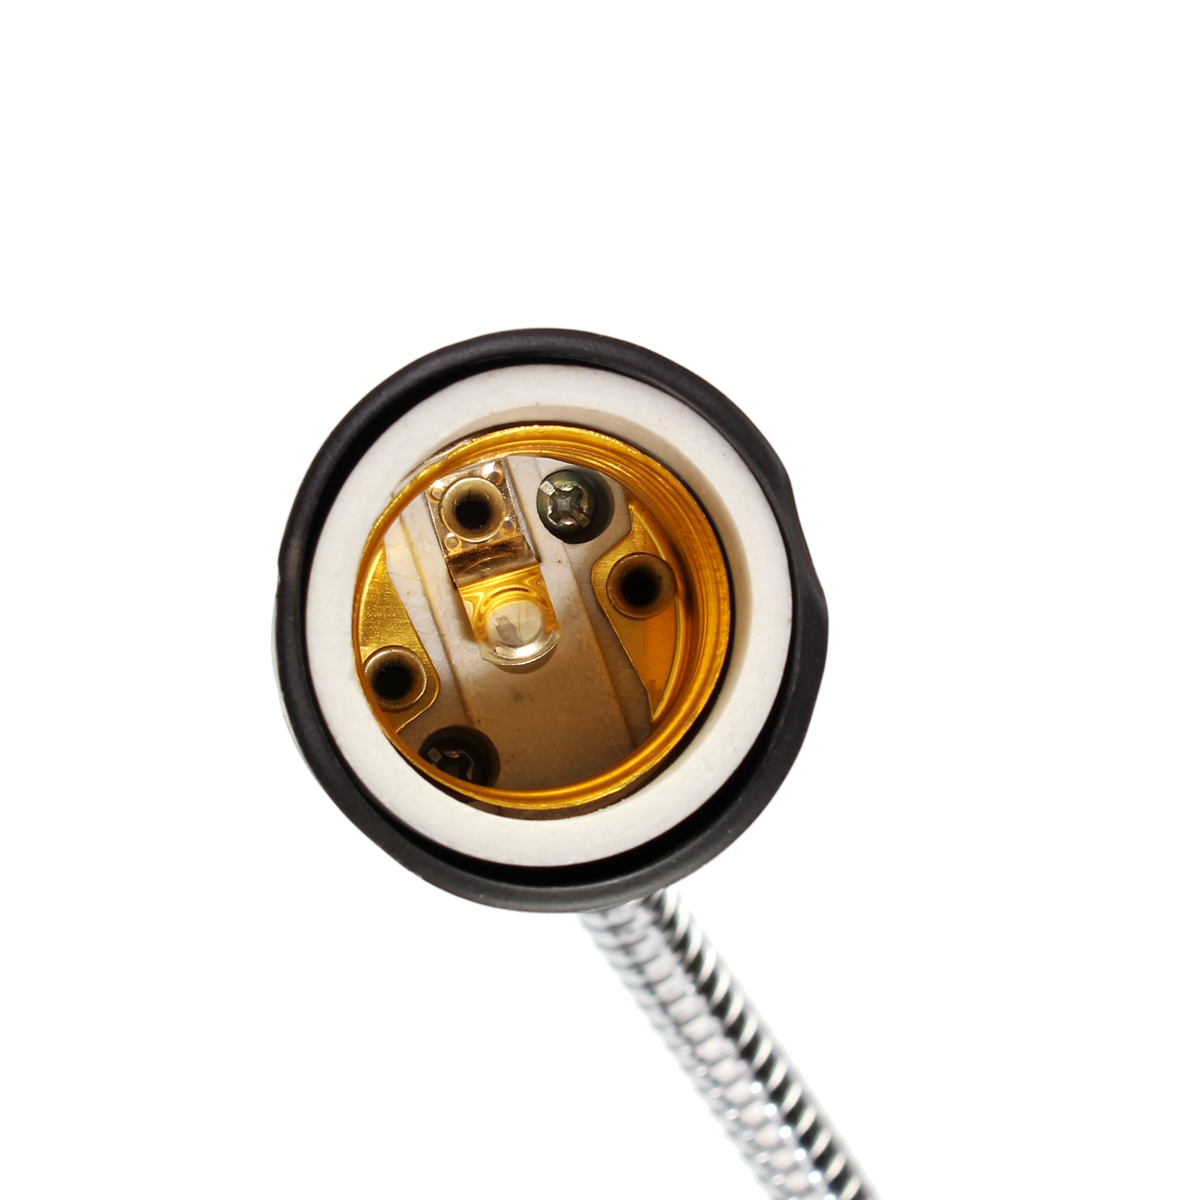 10CM-E27-Flexible-Bulb-Adapter-Lampholder-Socket-with-Clip-Dimming-Switch-EU-US-Plug-for-Pet-Light-1309715-3